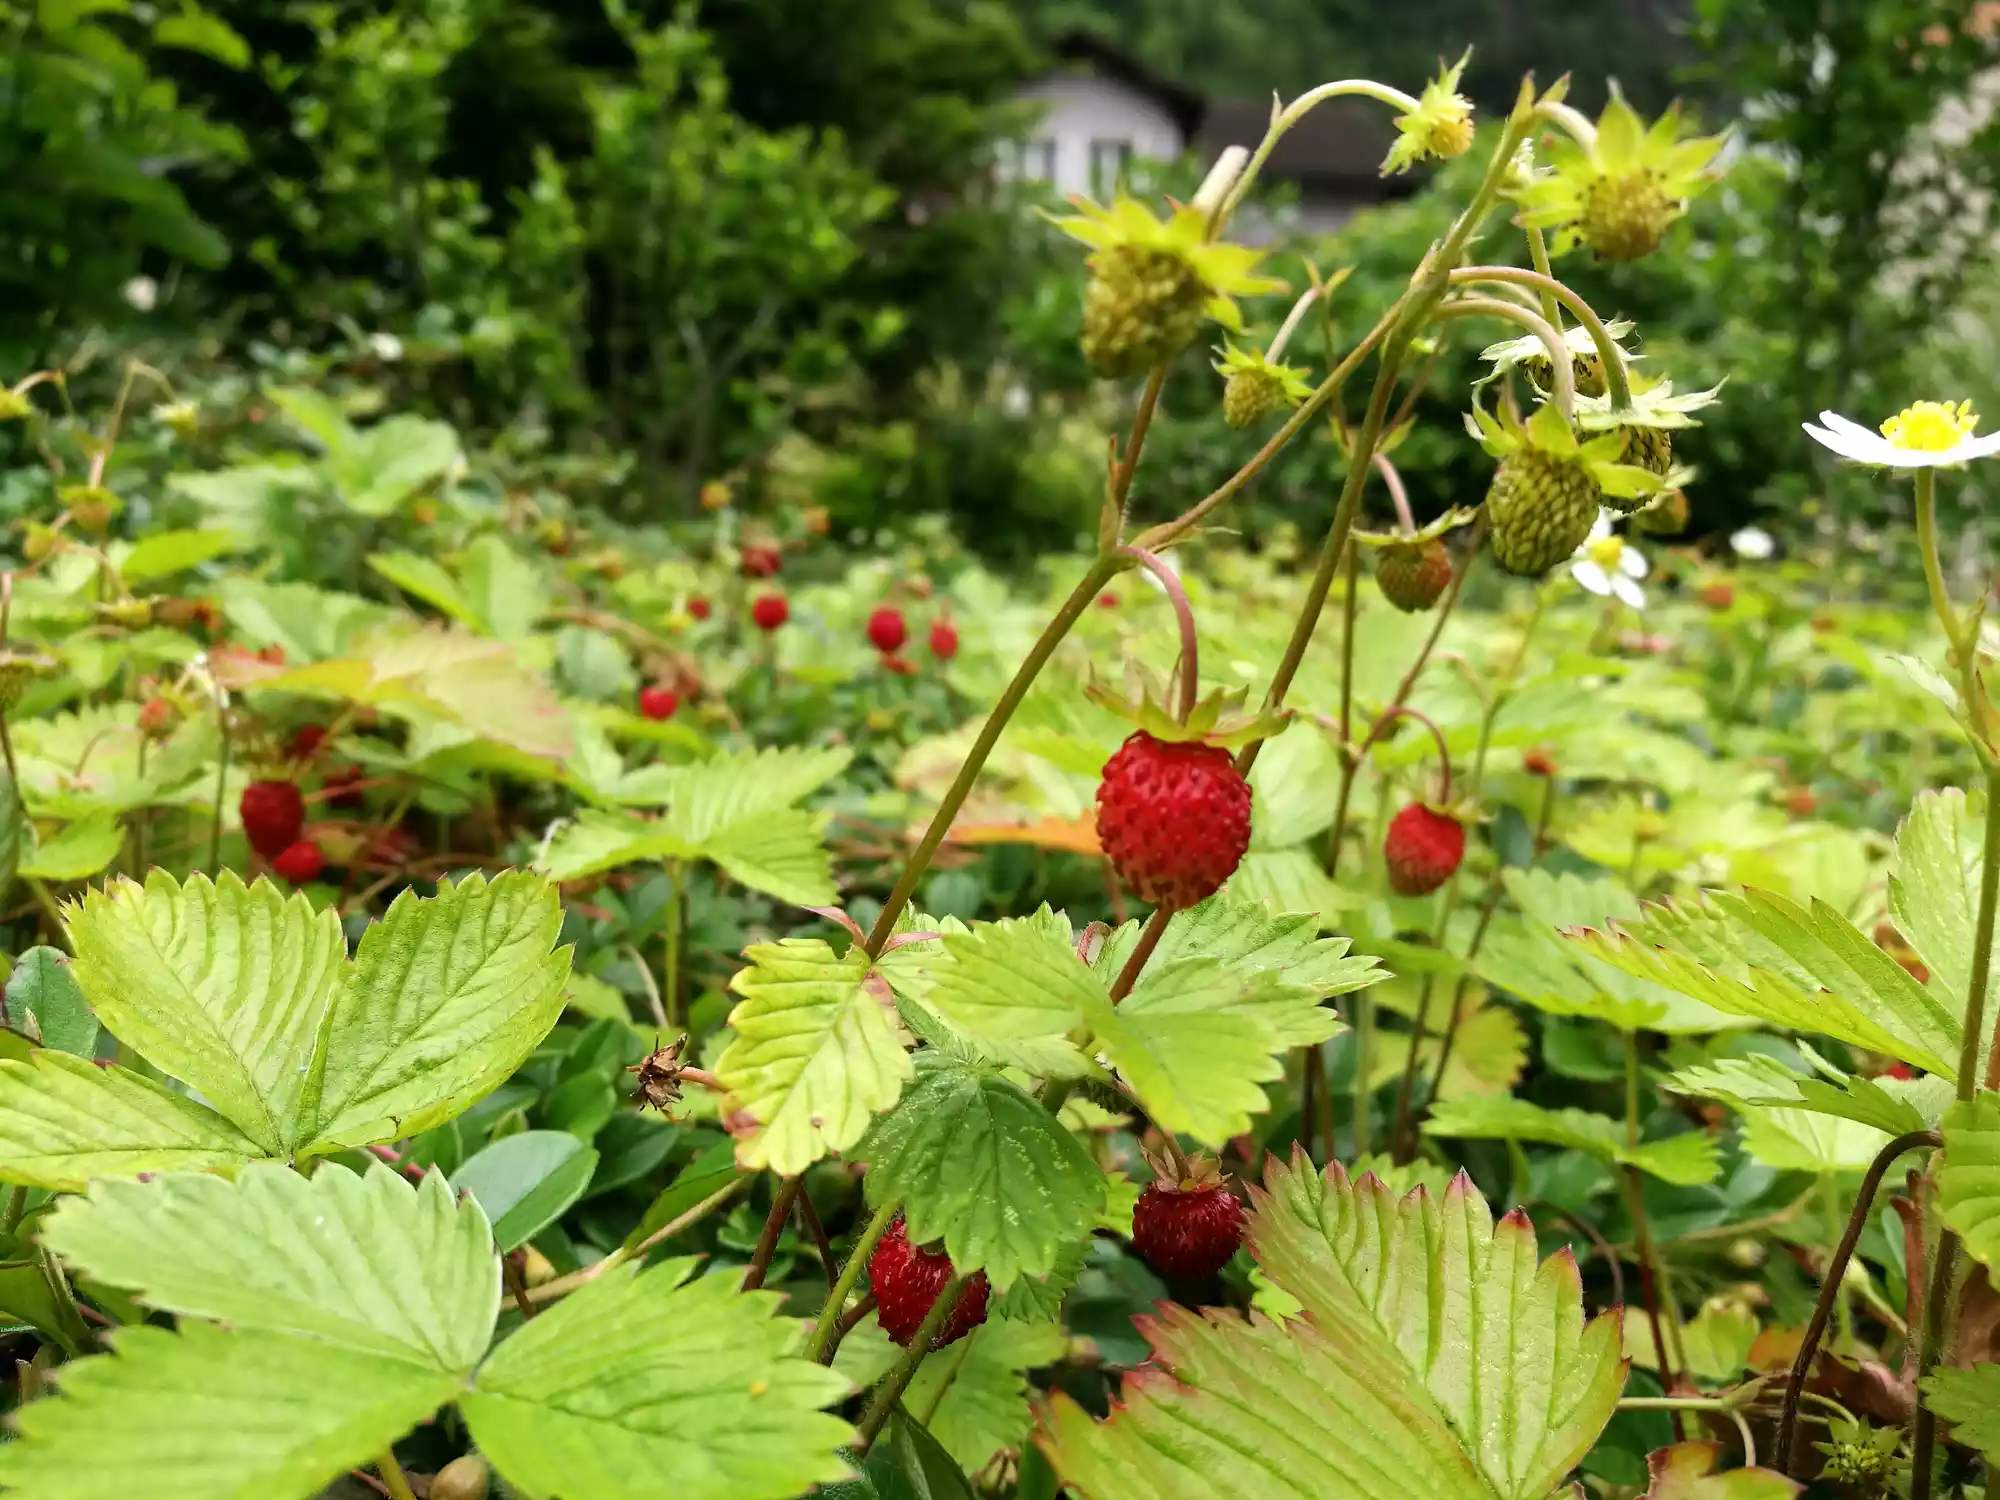 Alpine strawberries growing in a backyard setting.